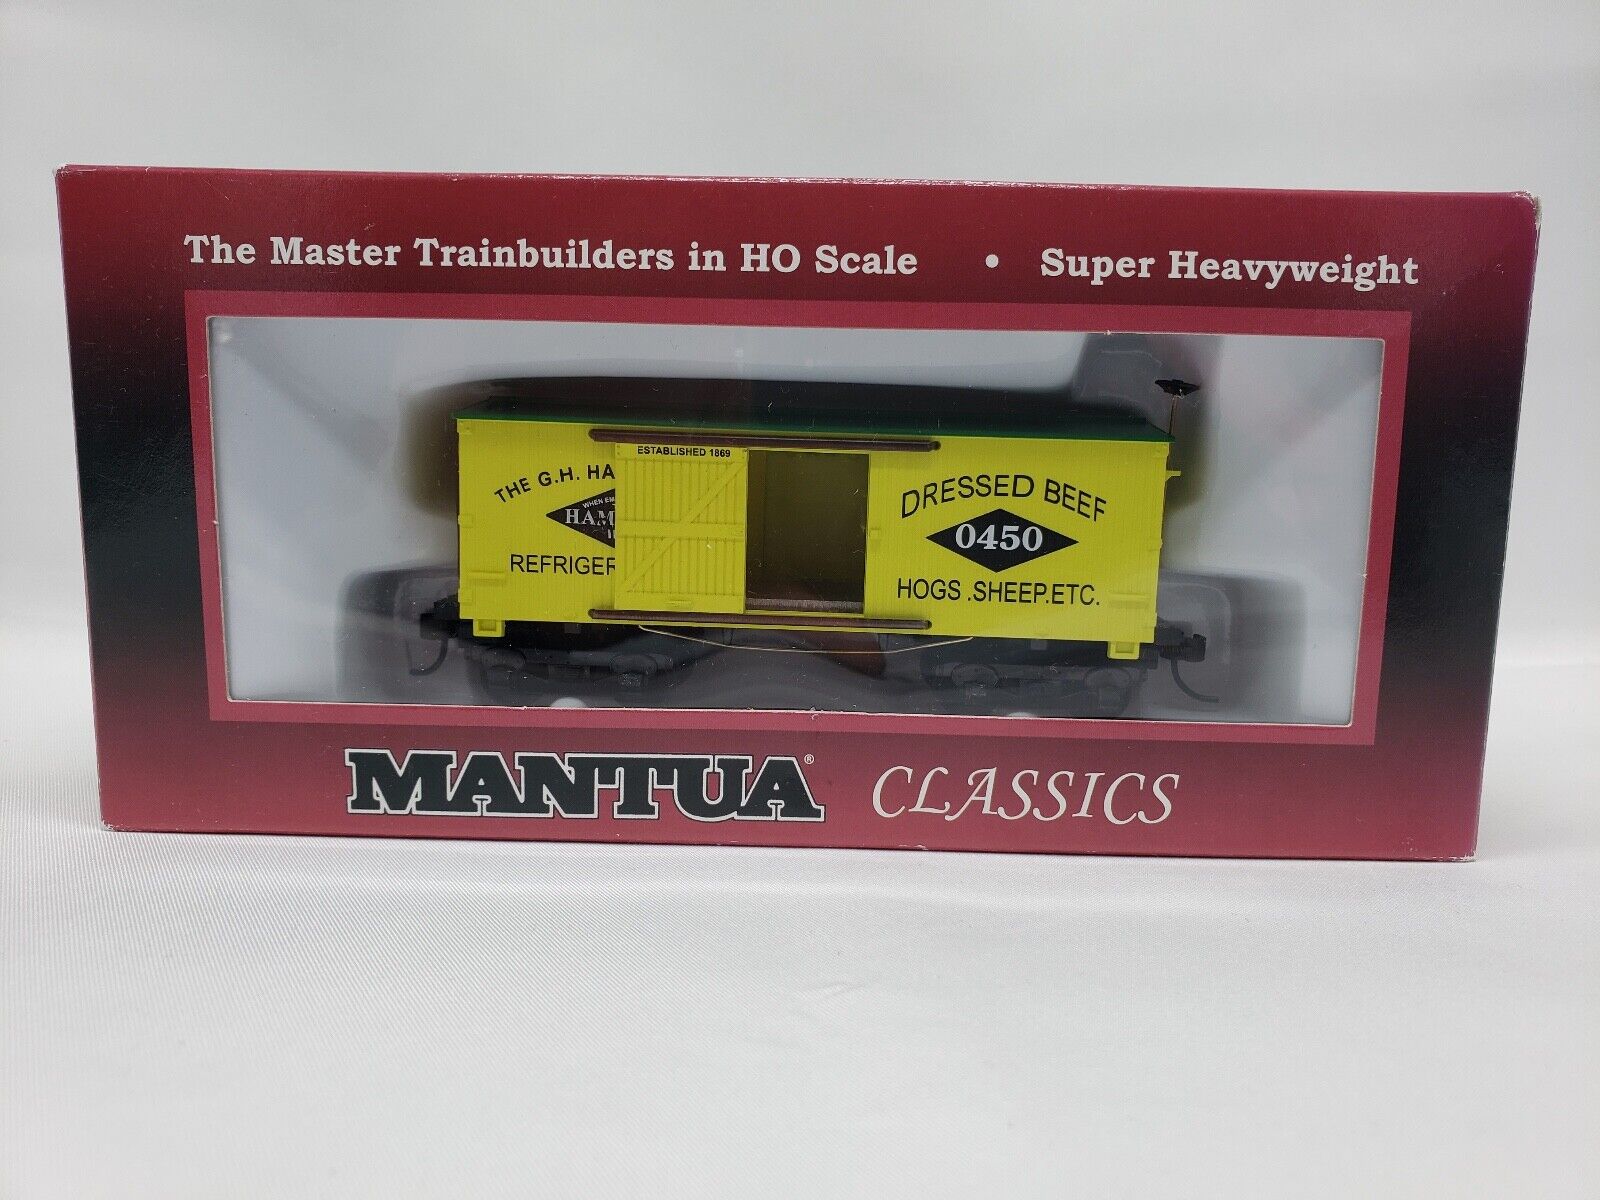 Mantua Classics Master Train builders in HO Super Heavyweight rp-25 wheels